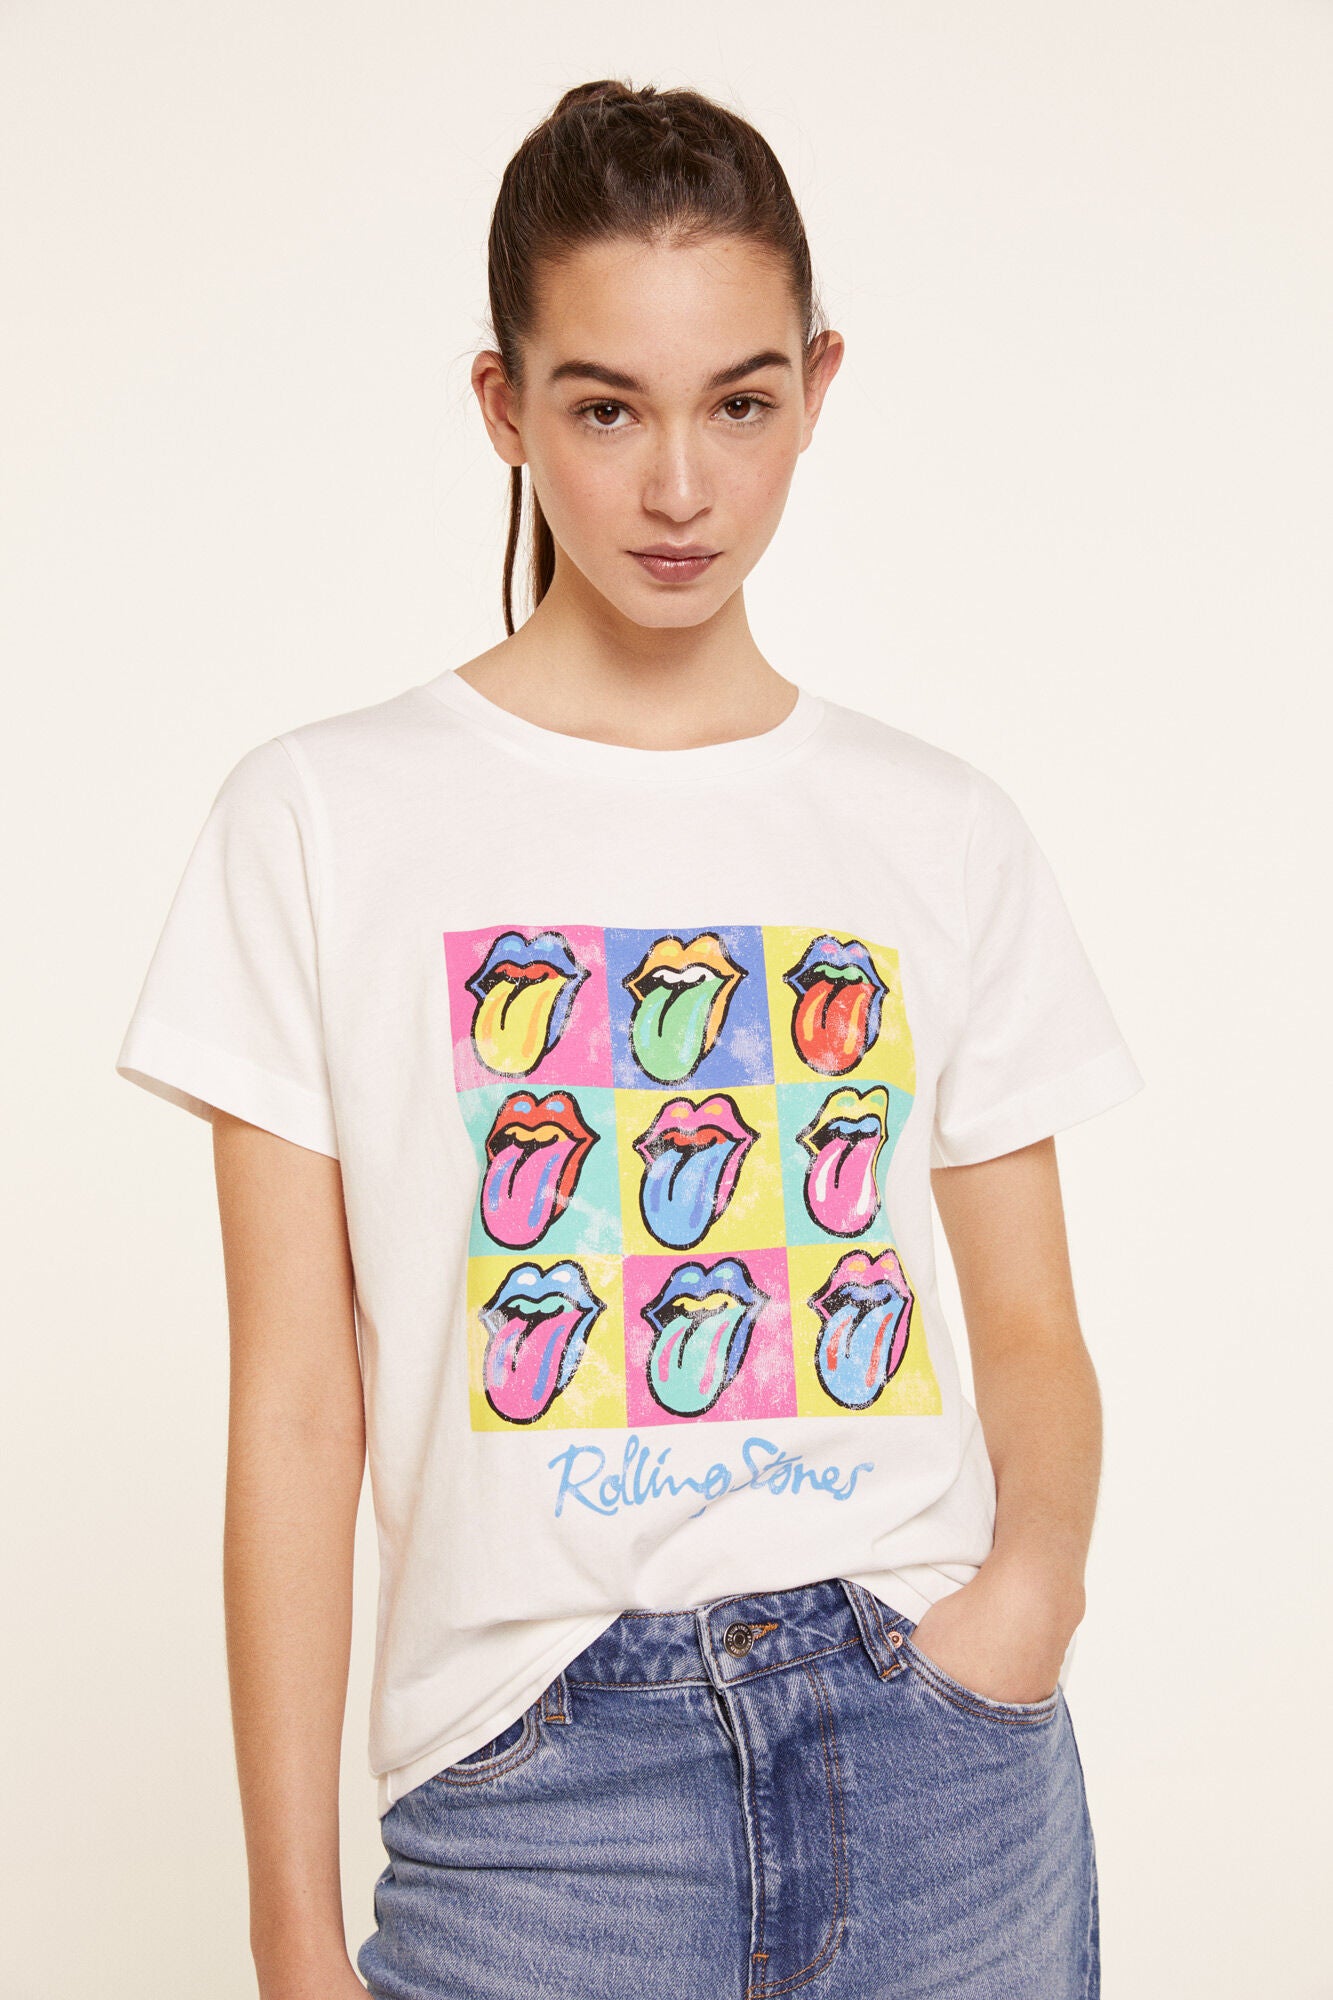 Rolling Stones T-shirt